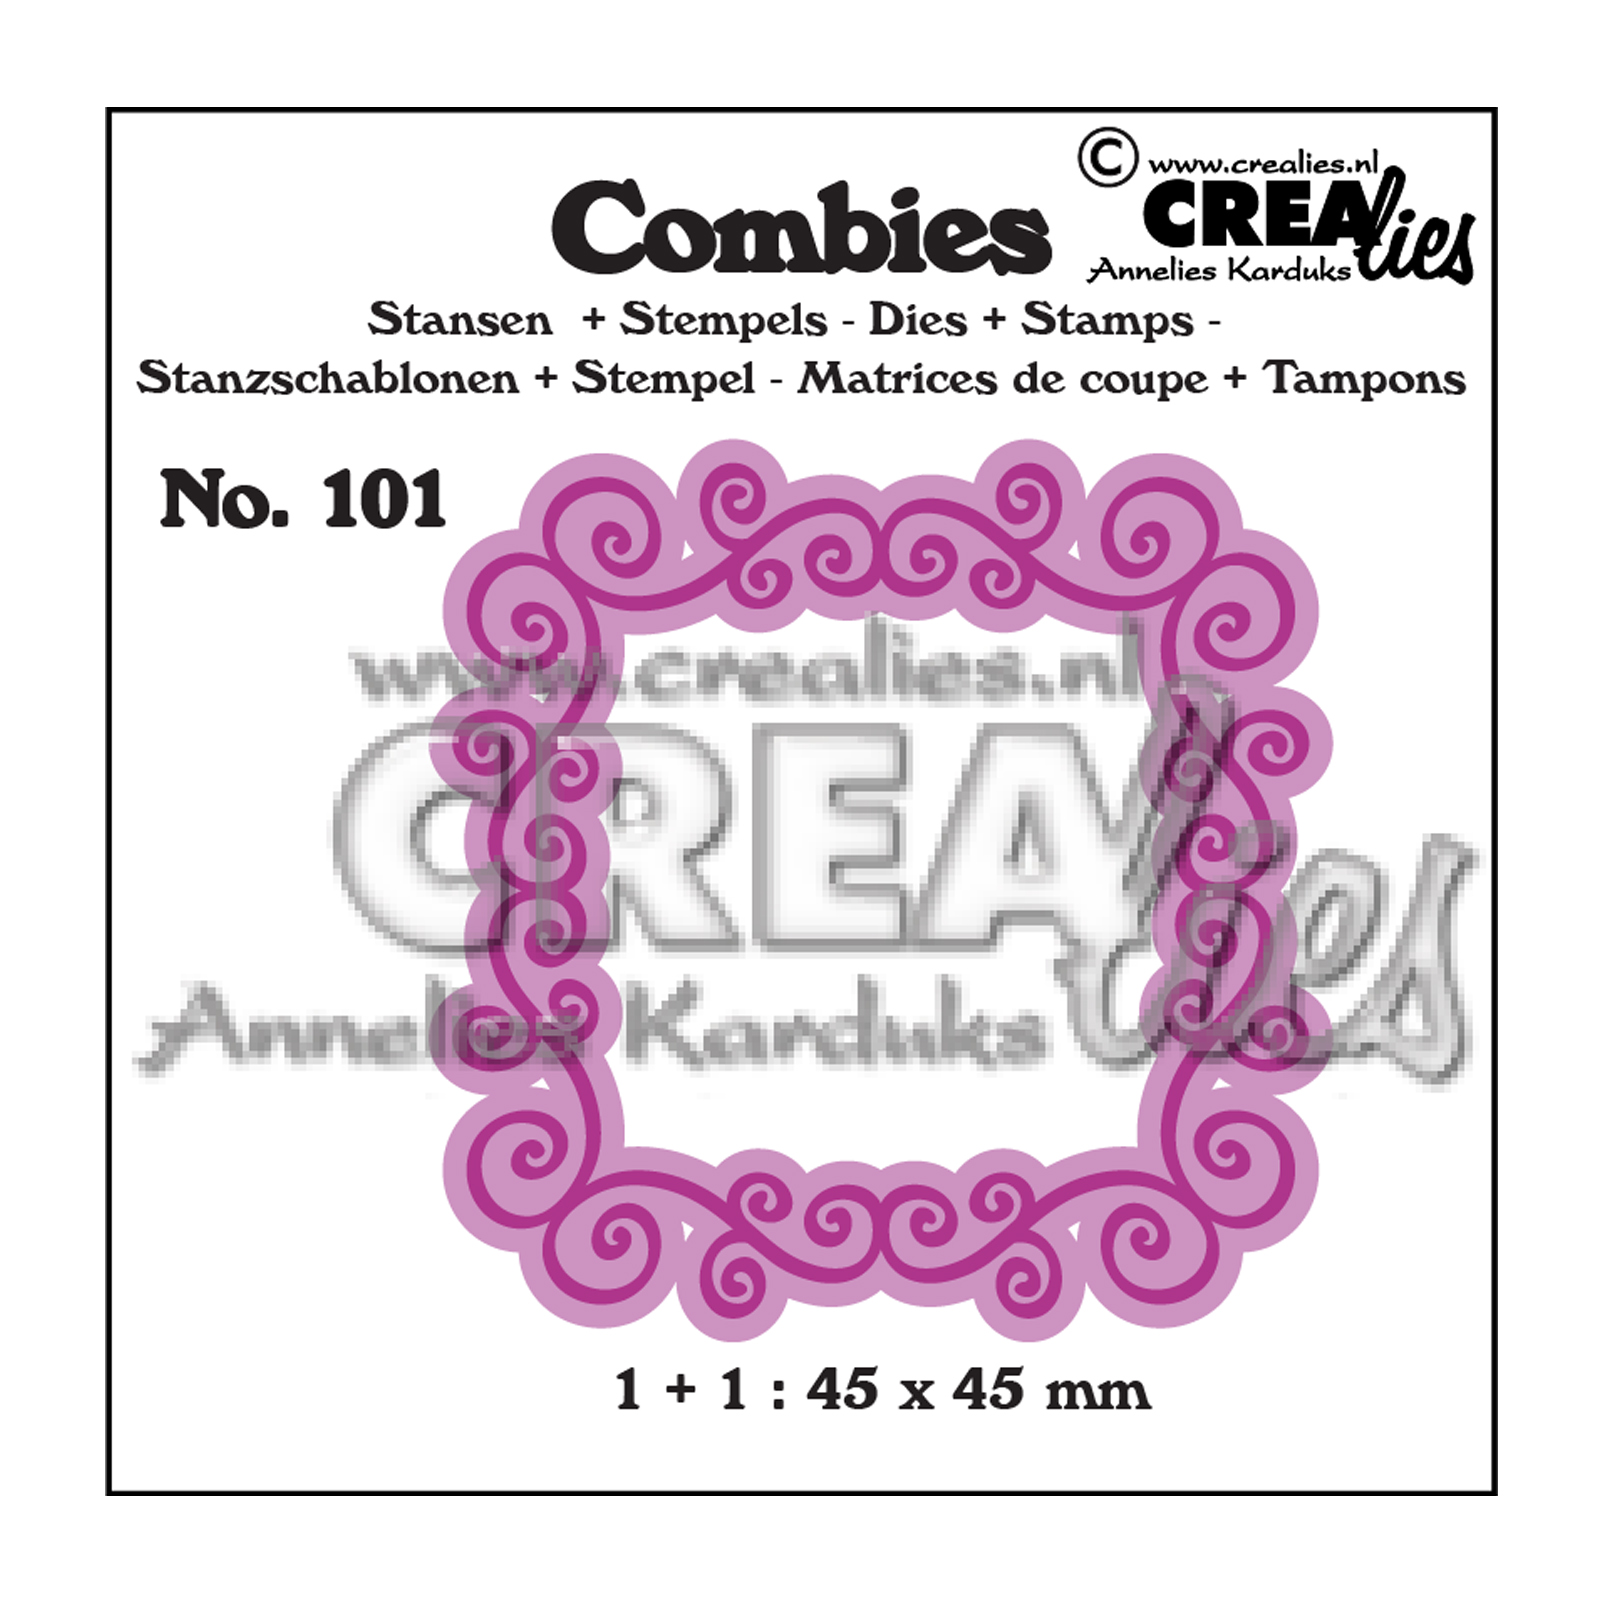 Crealies • Combies fustelle da taglio & timbri set no.101 Frame A